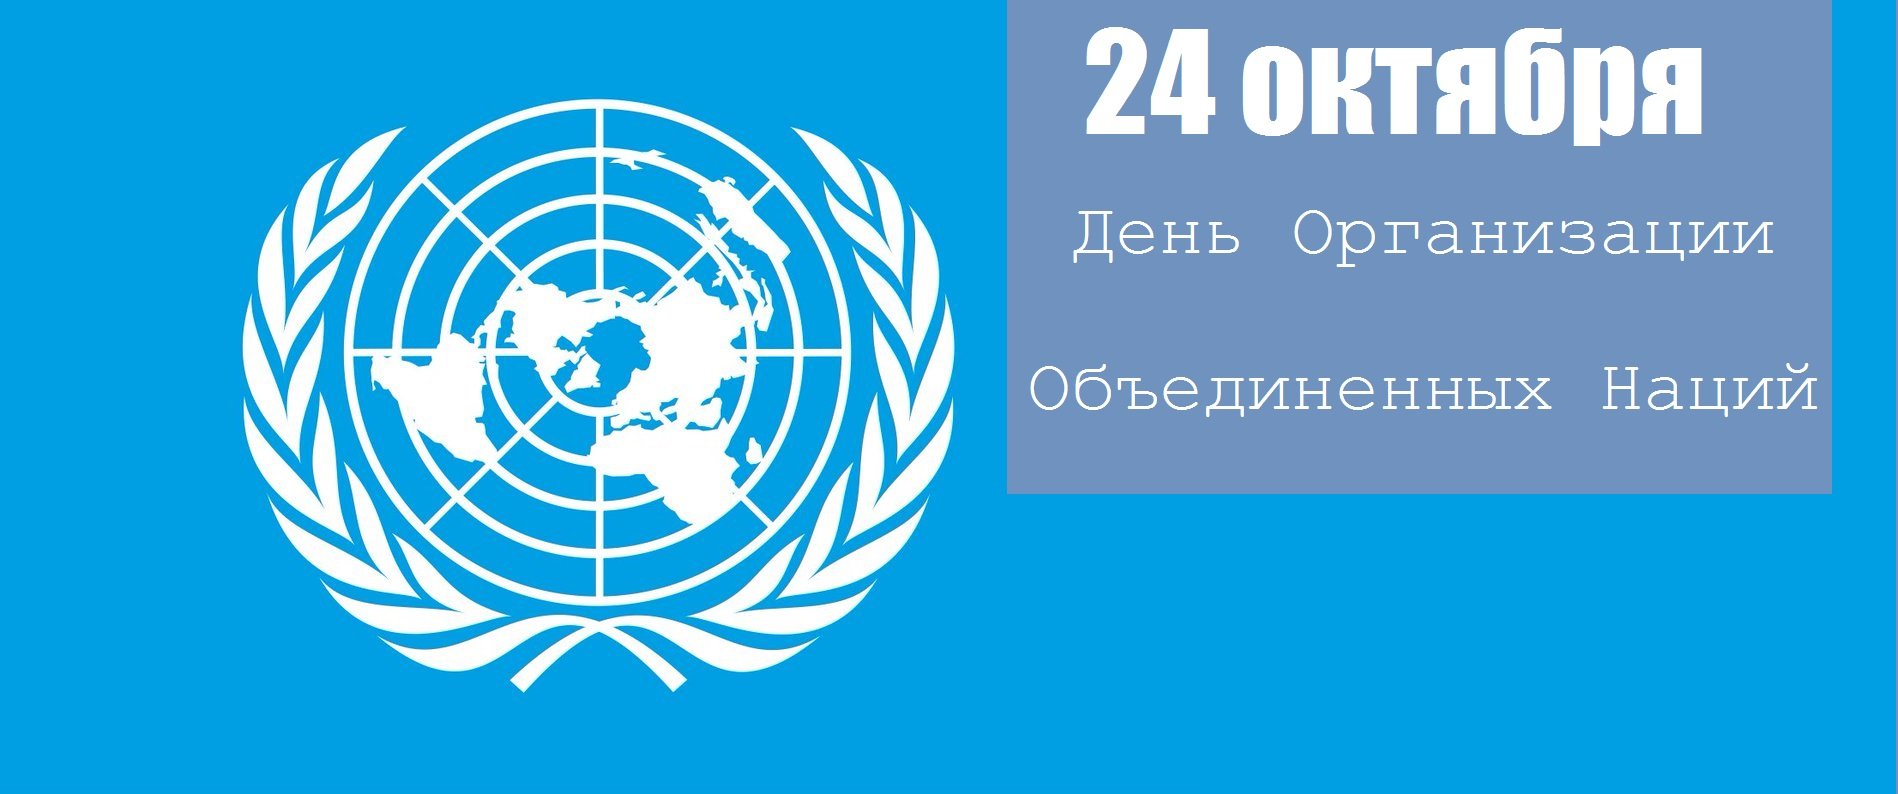 United Nations Organization.